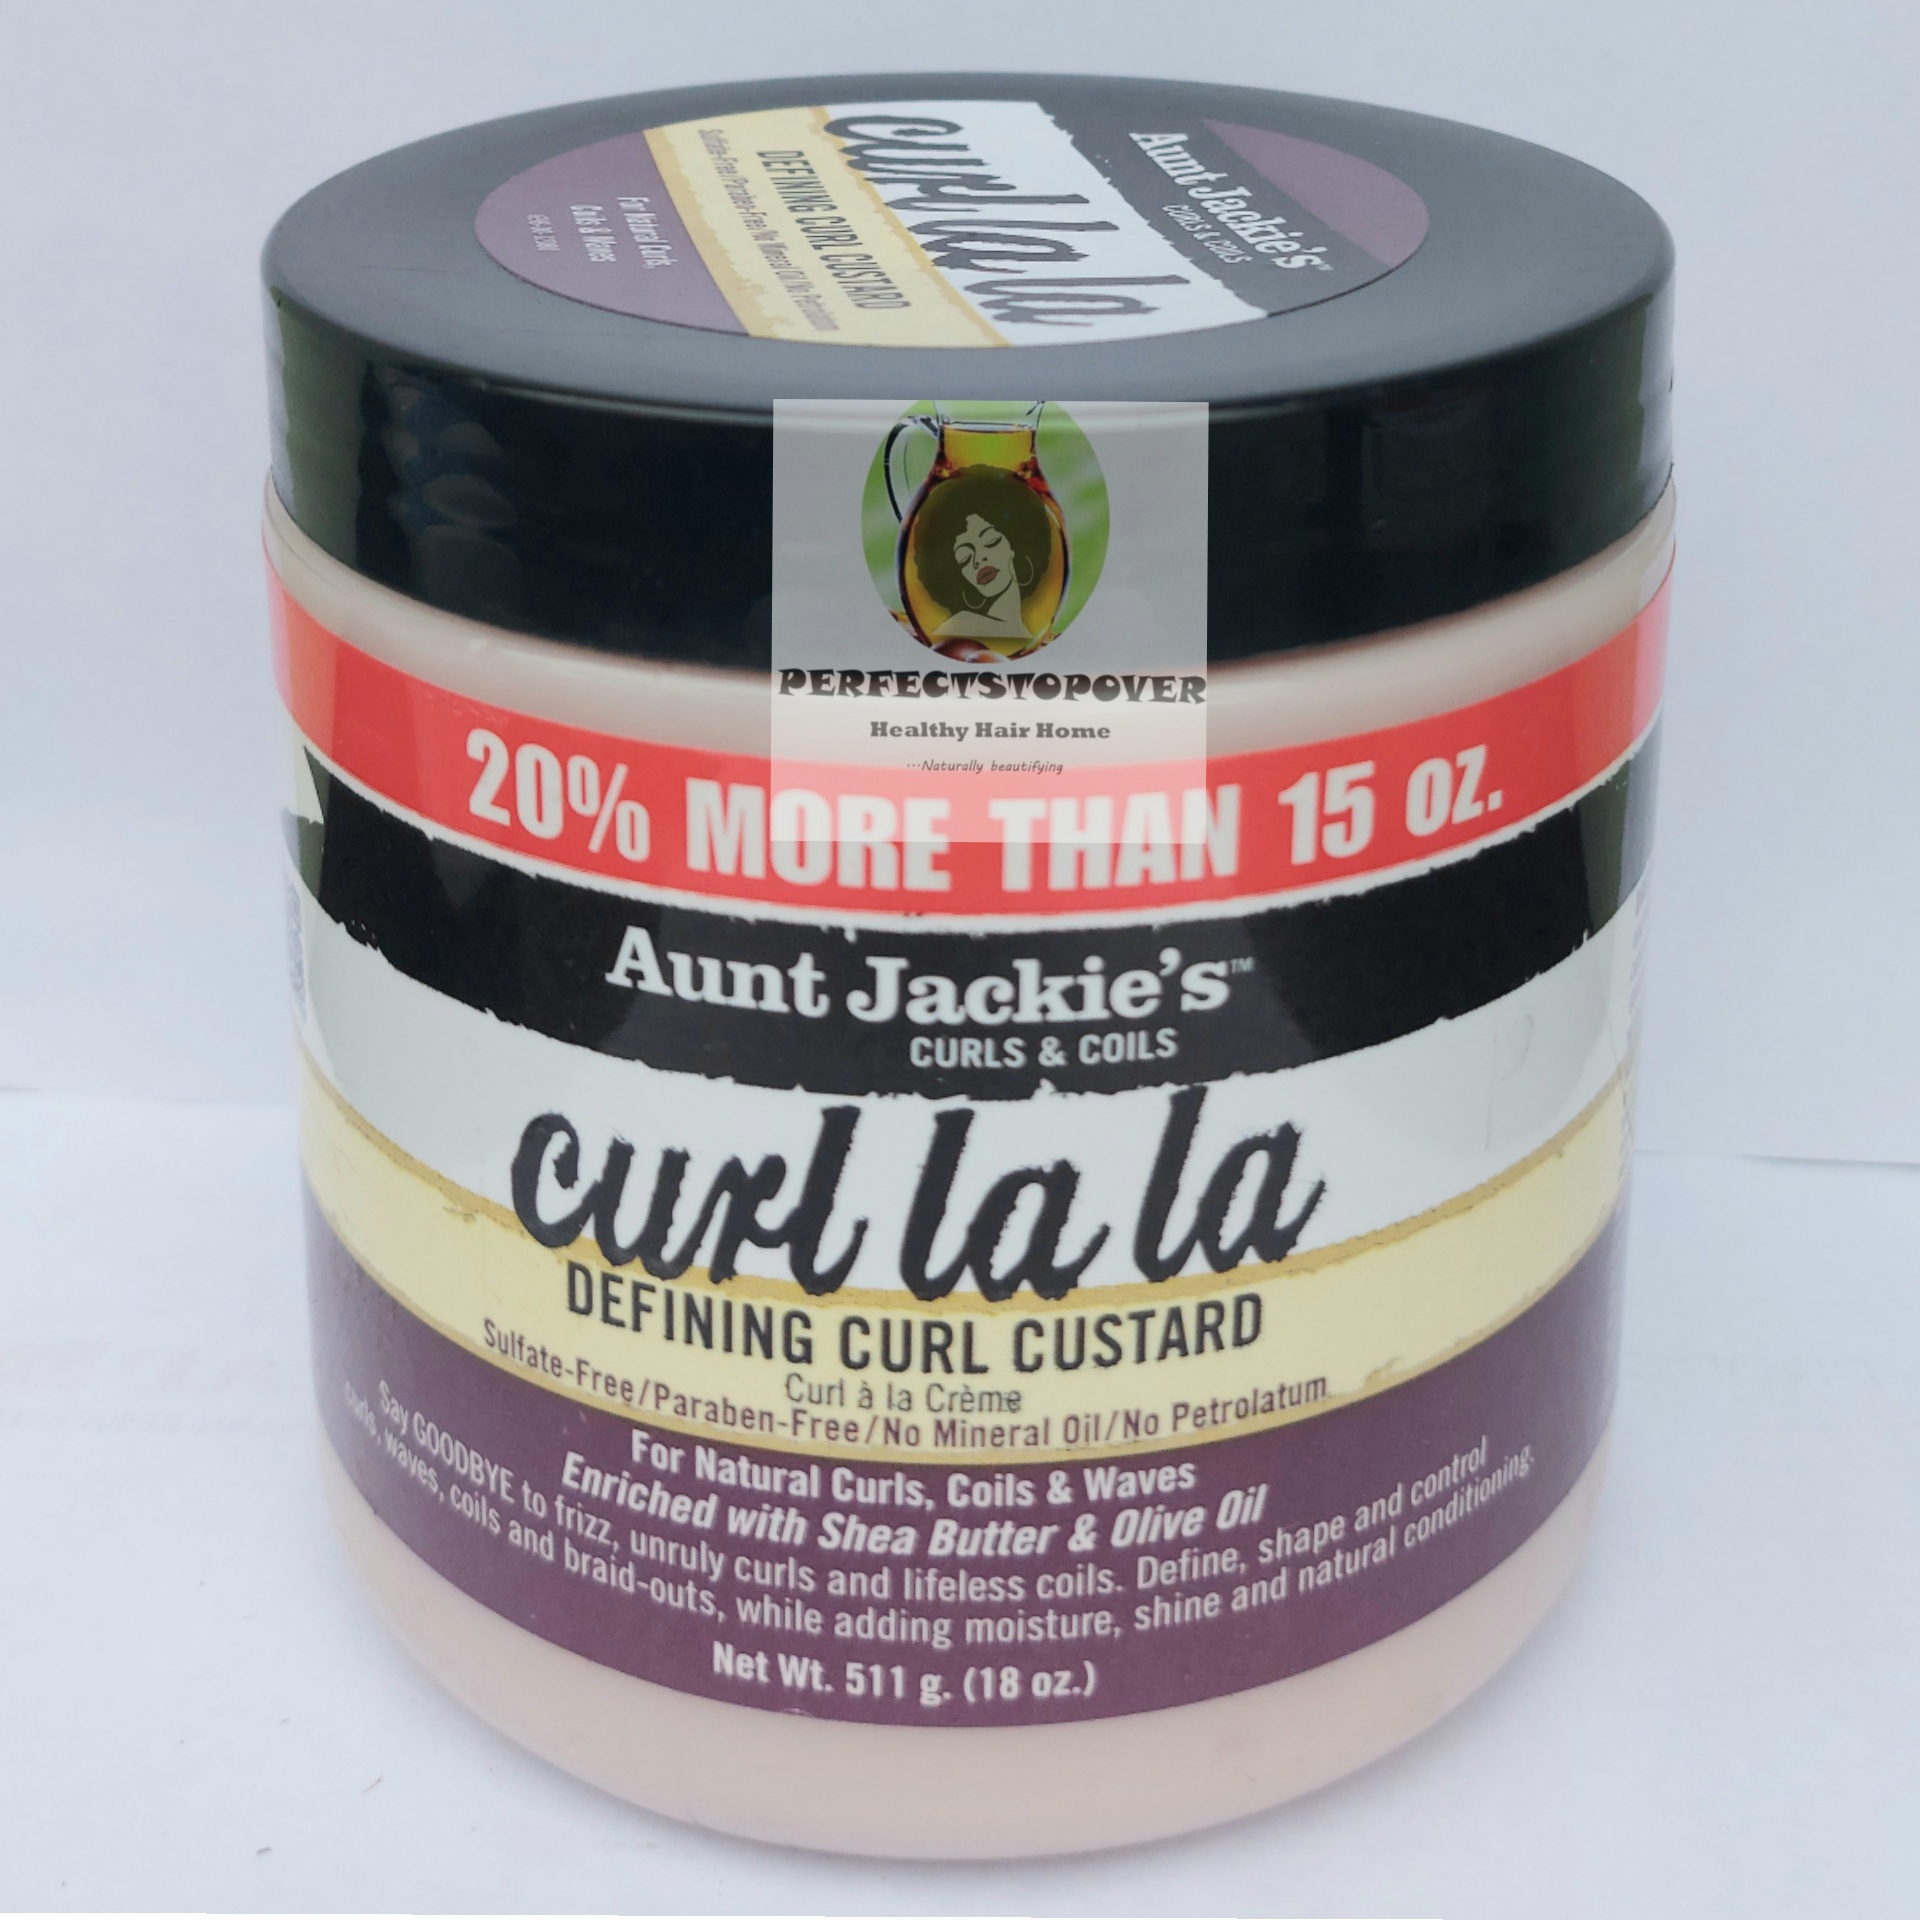 Aunt Jackie’s curls and coils CURL LA LA defining curl custard 33% more